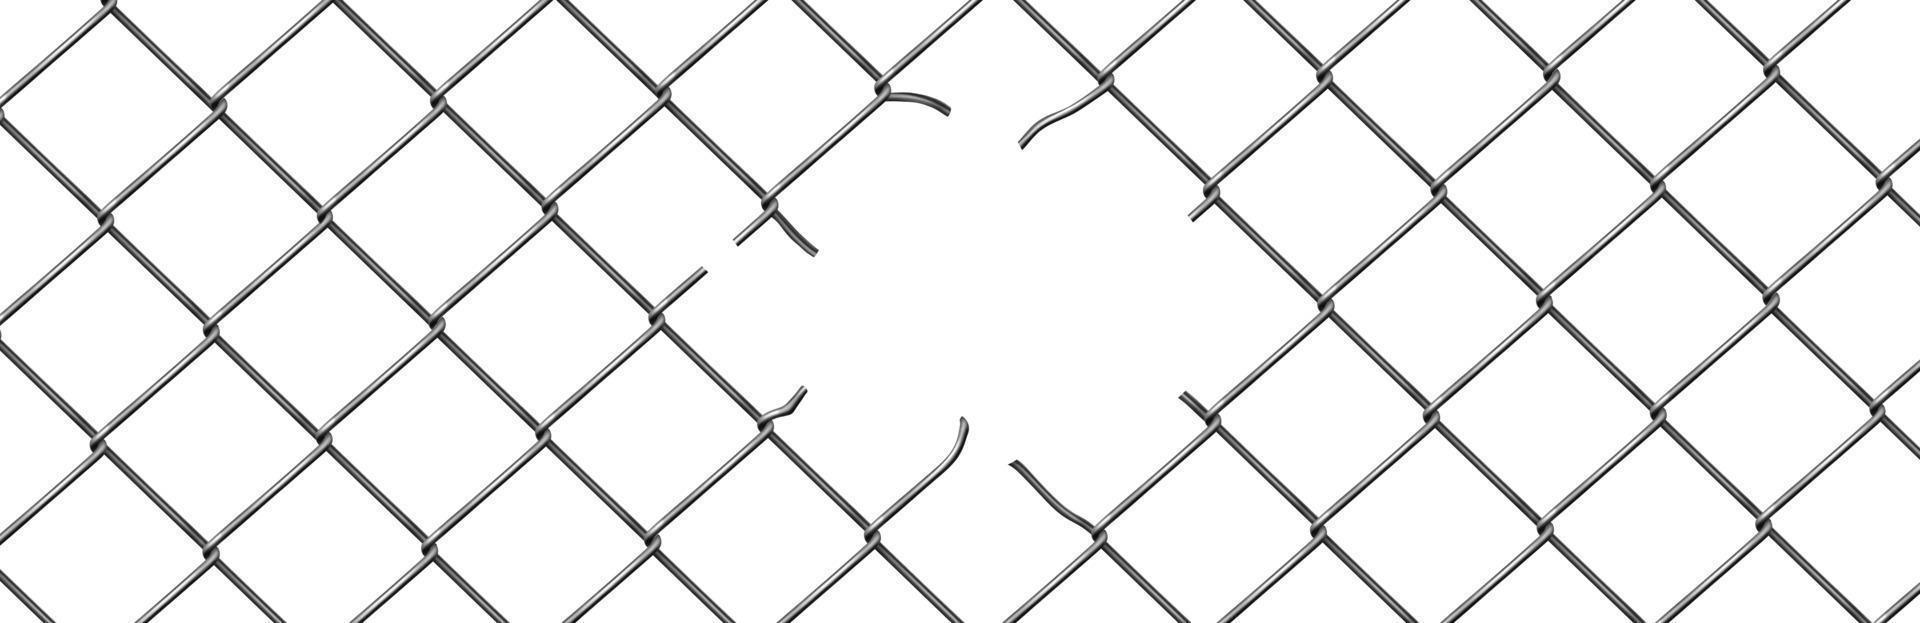 Broken wire fence, rabitz or chain link background vector